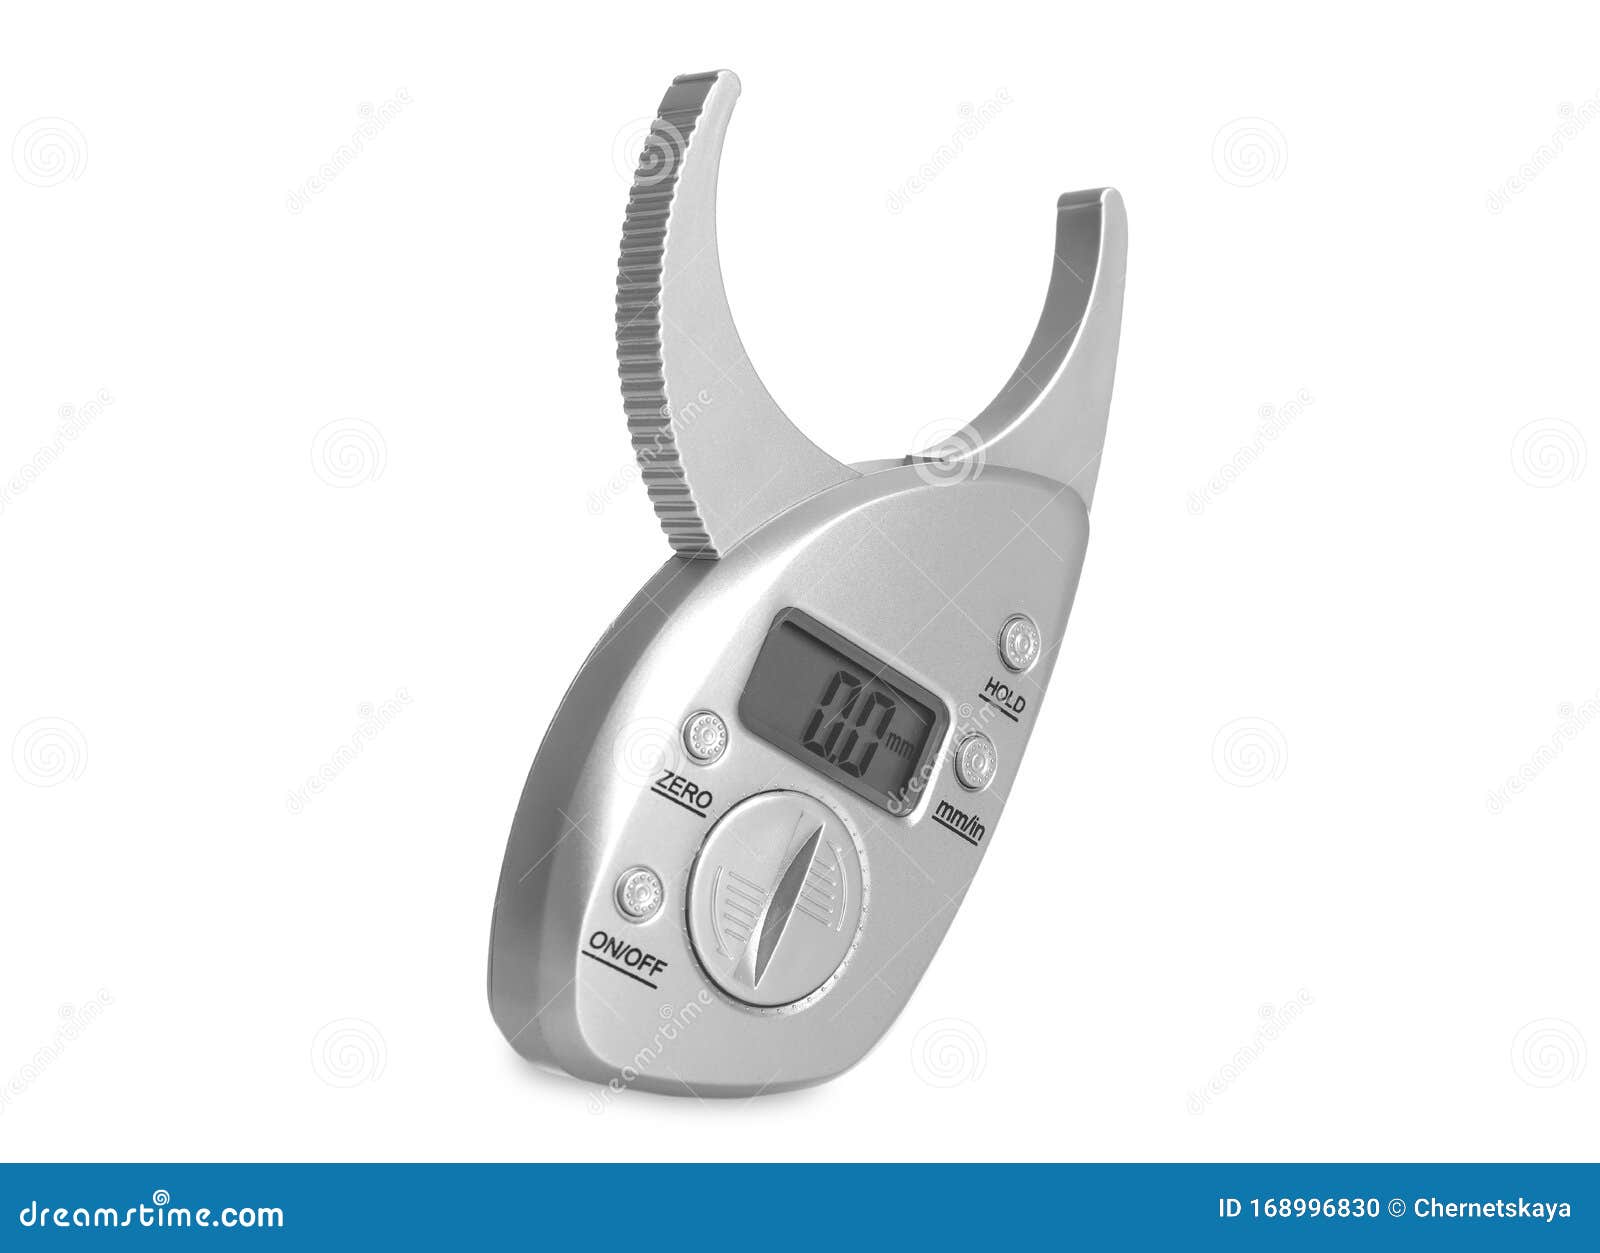 Digital Body Fat Caliper Isolated Stock Photo - Image of exercise